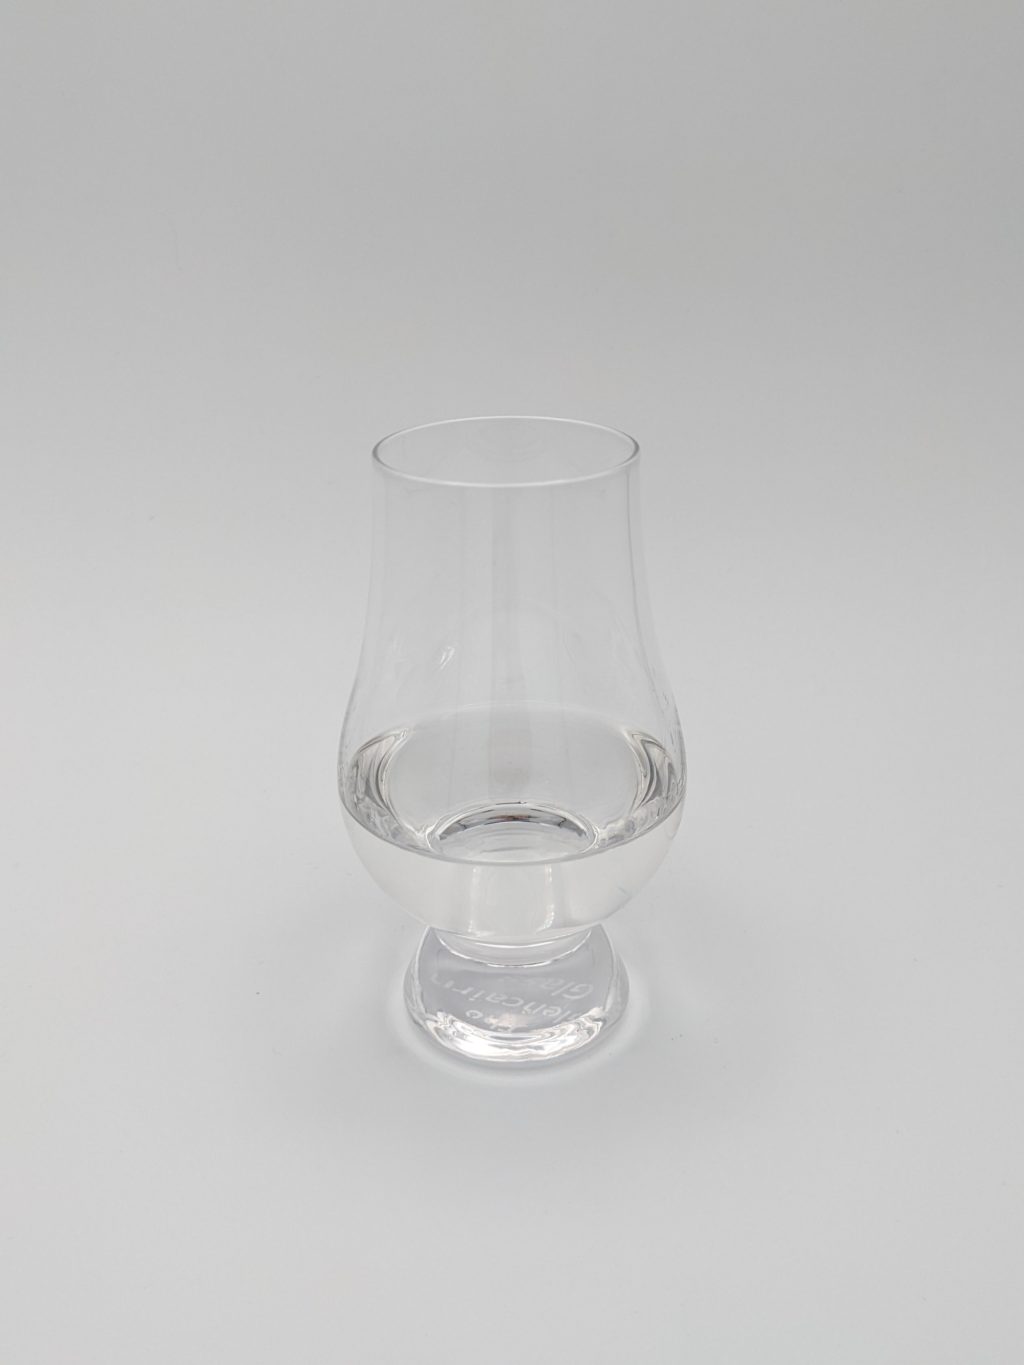 clear liquid in a glencairn glass